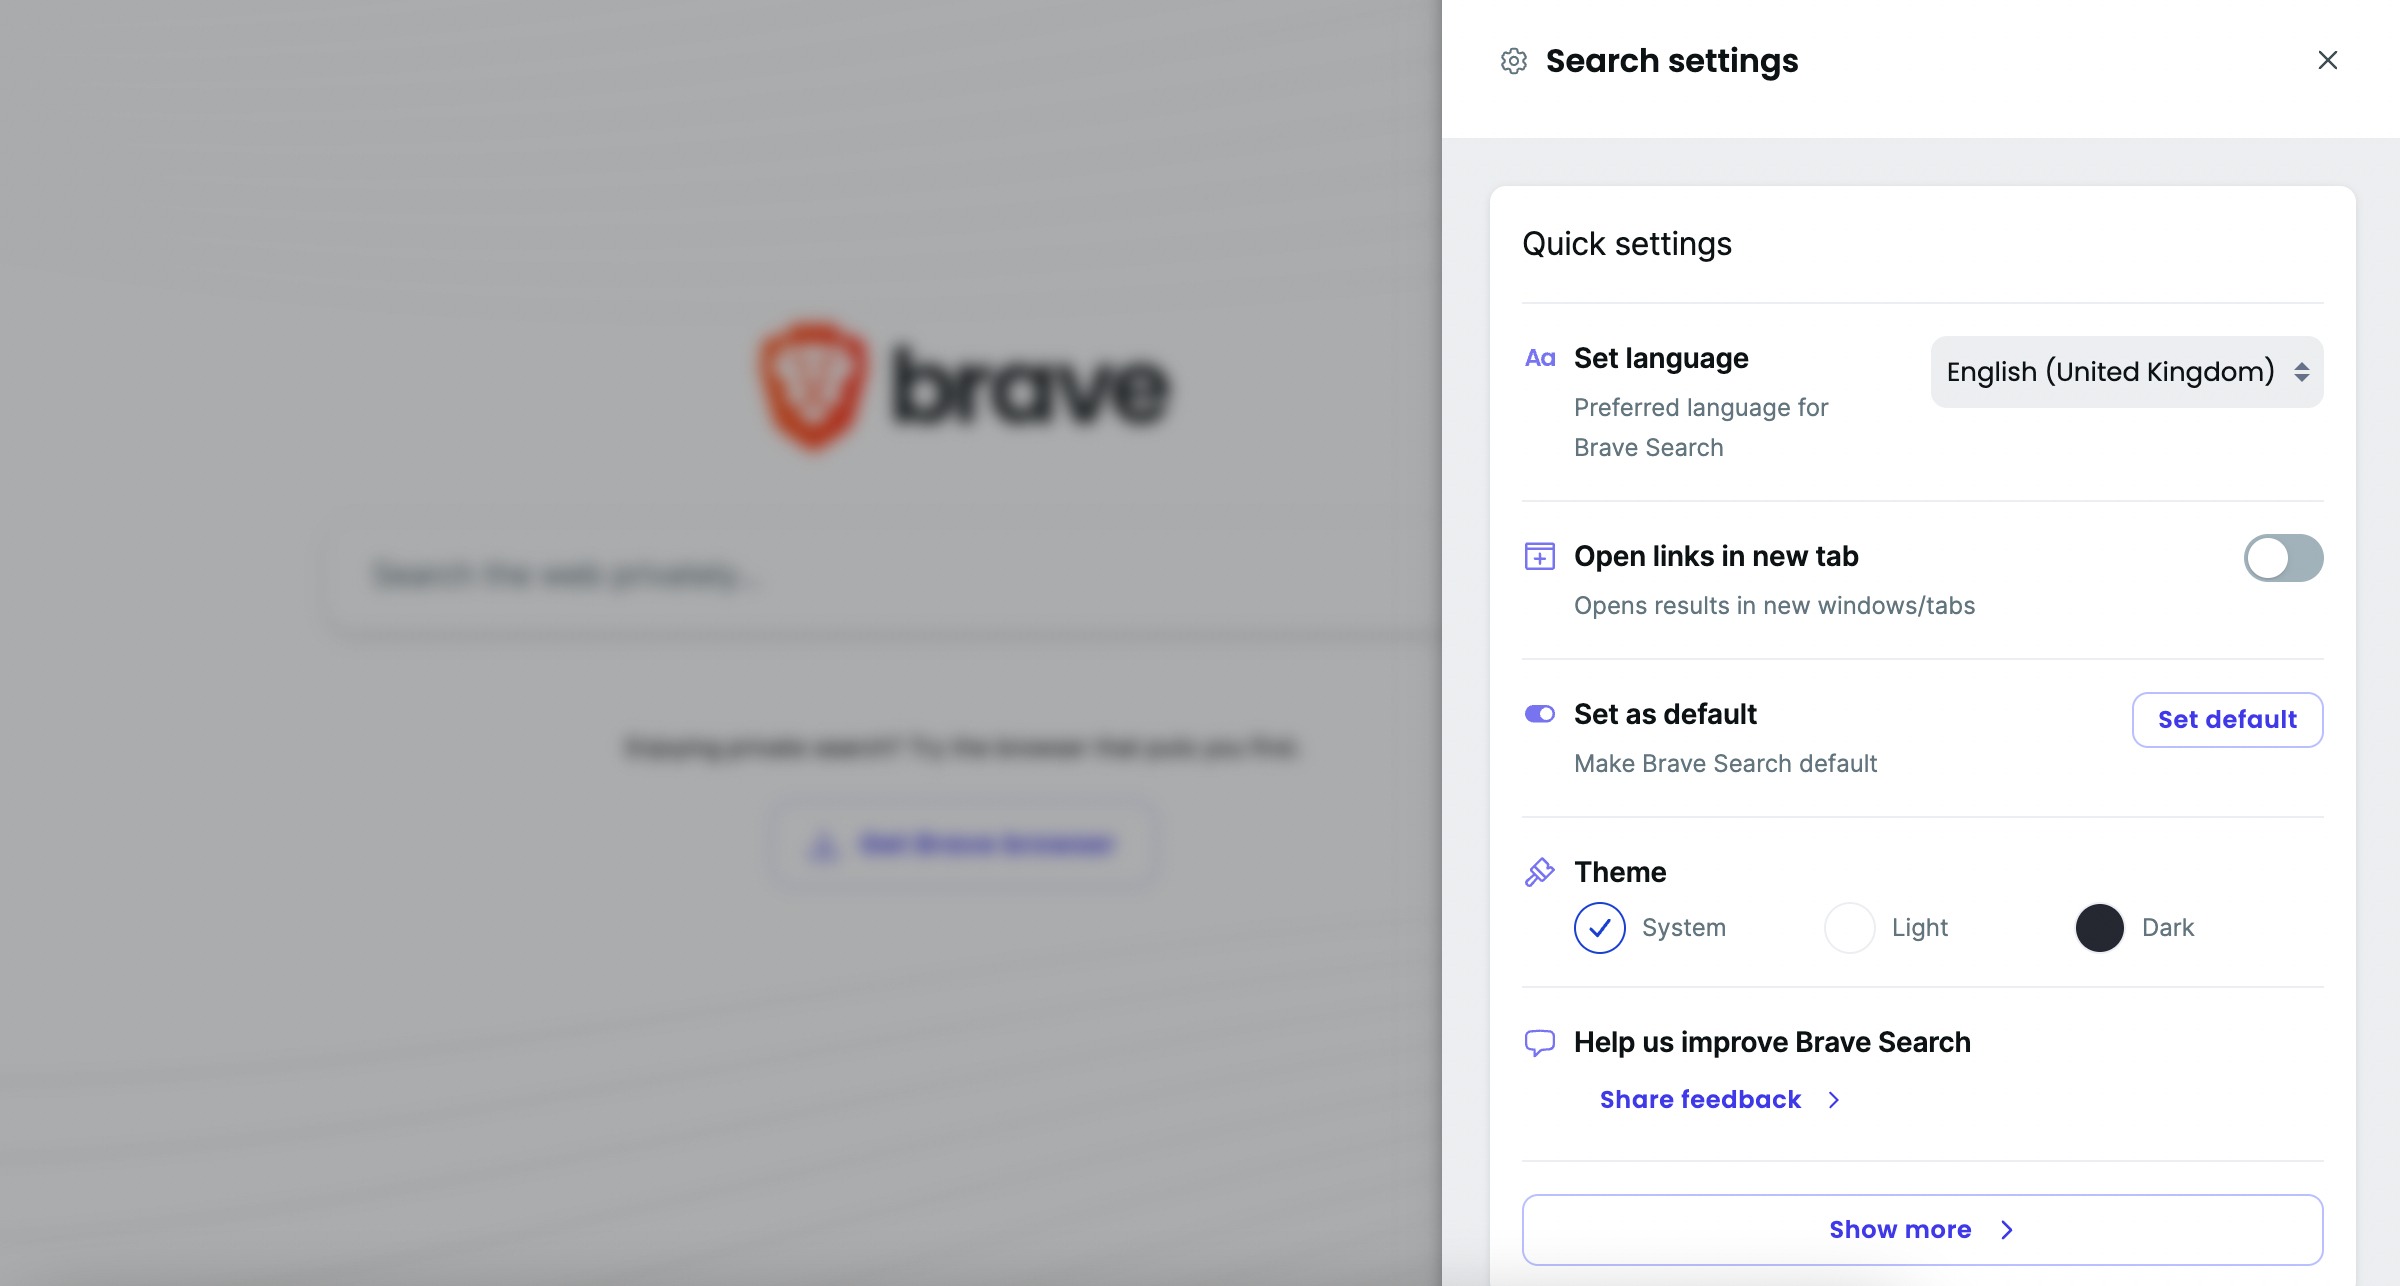 Brave Search settings